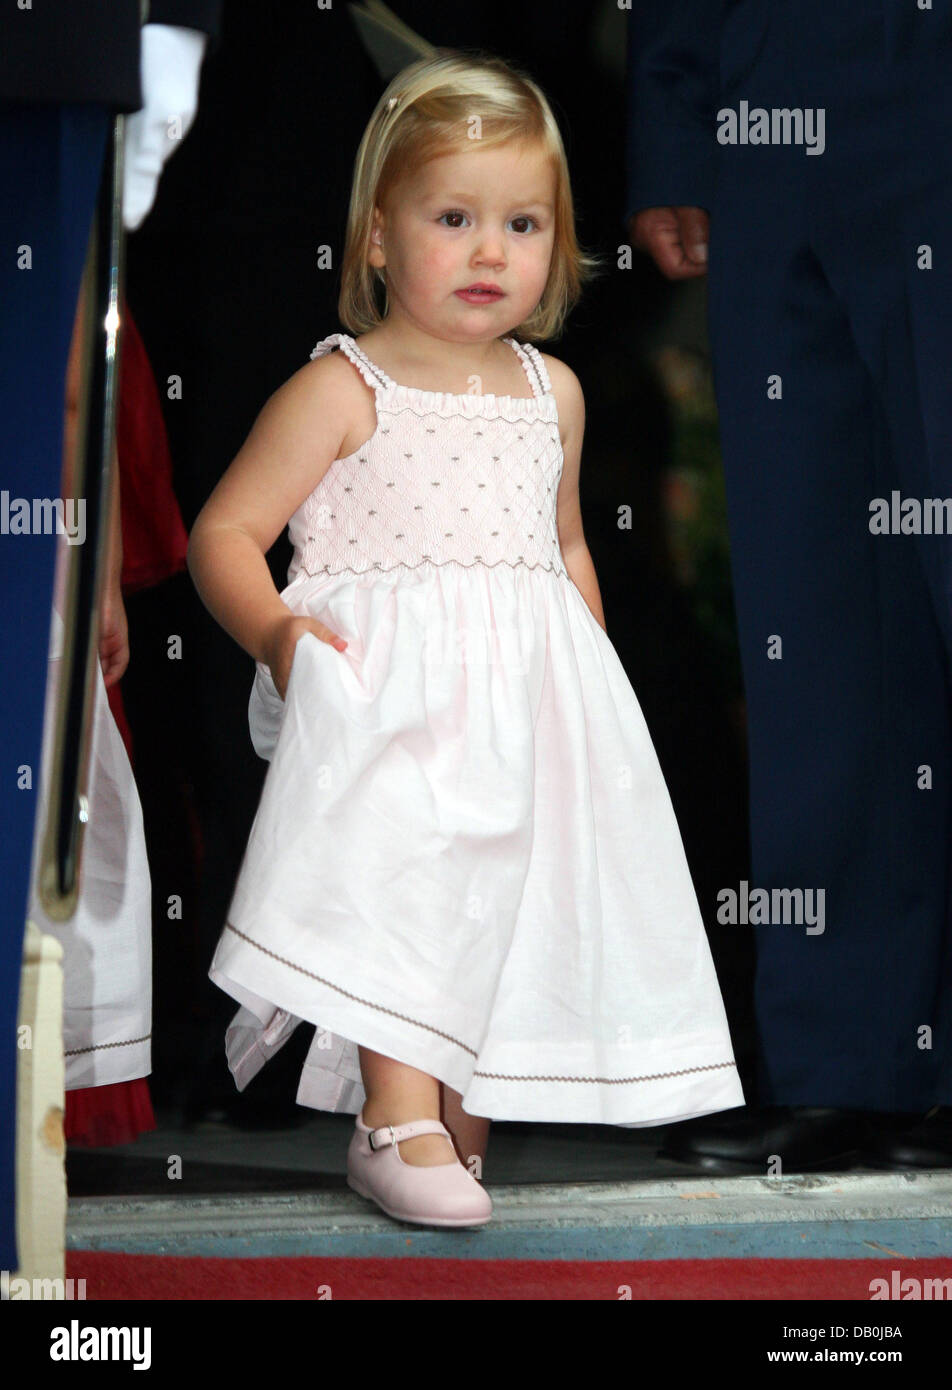 Princess Alexia: Latest News, Pictures & Videos - HELLO!